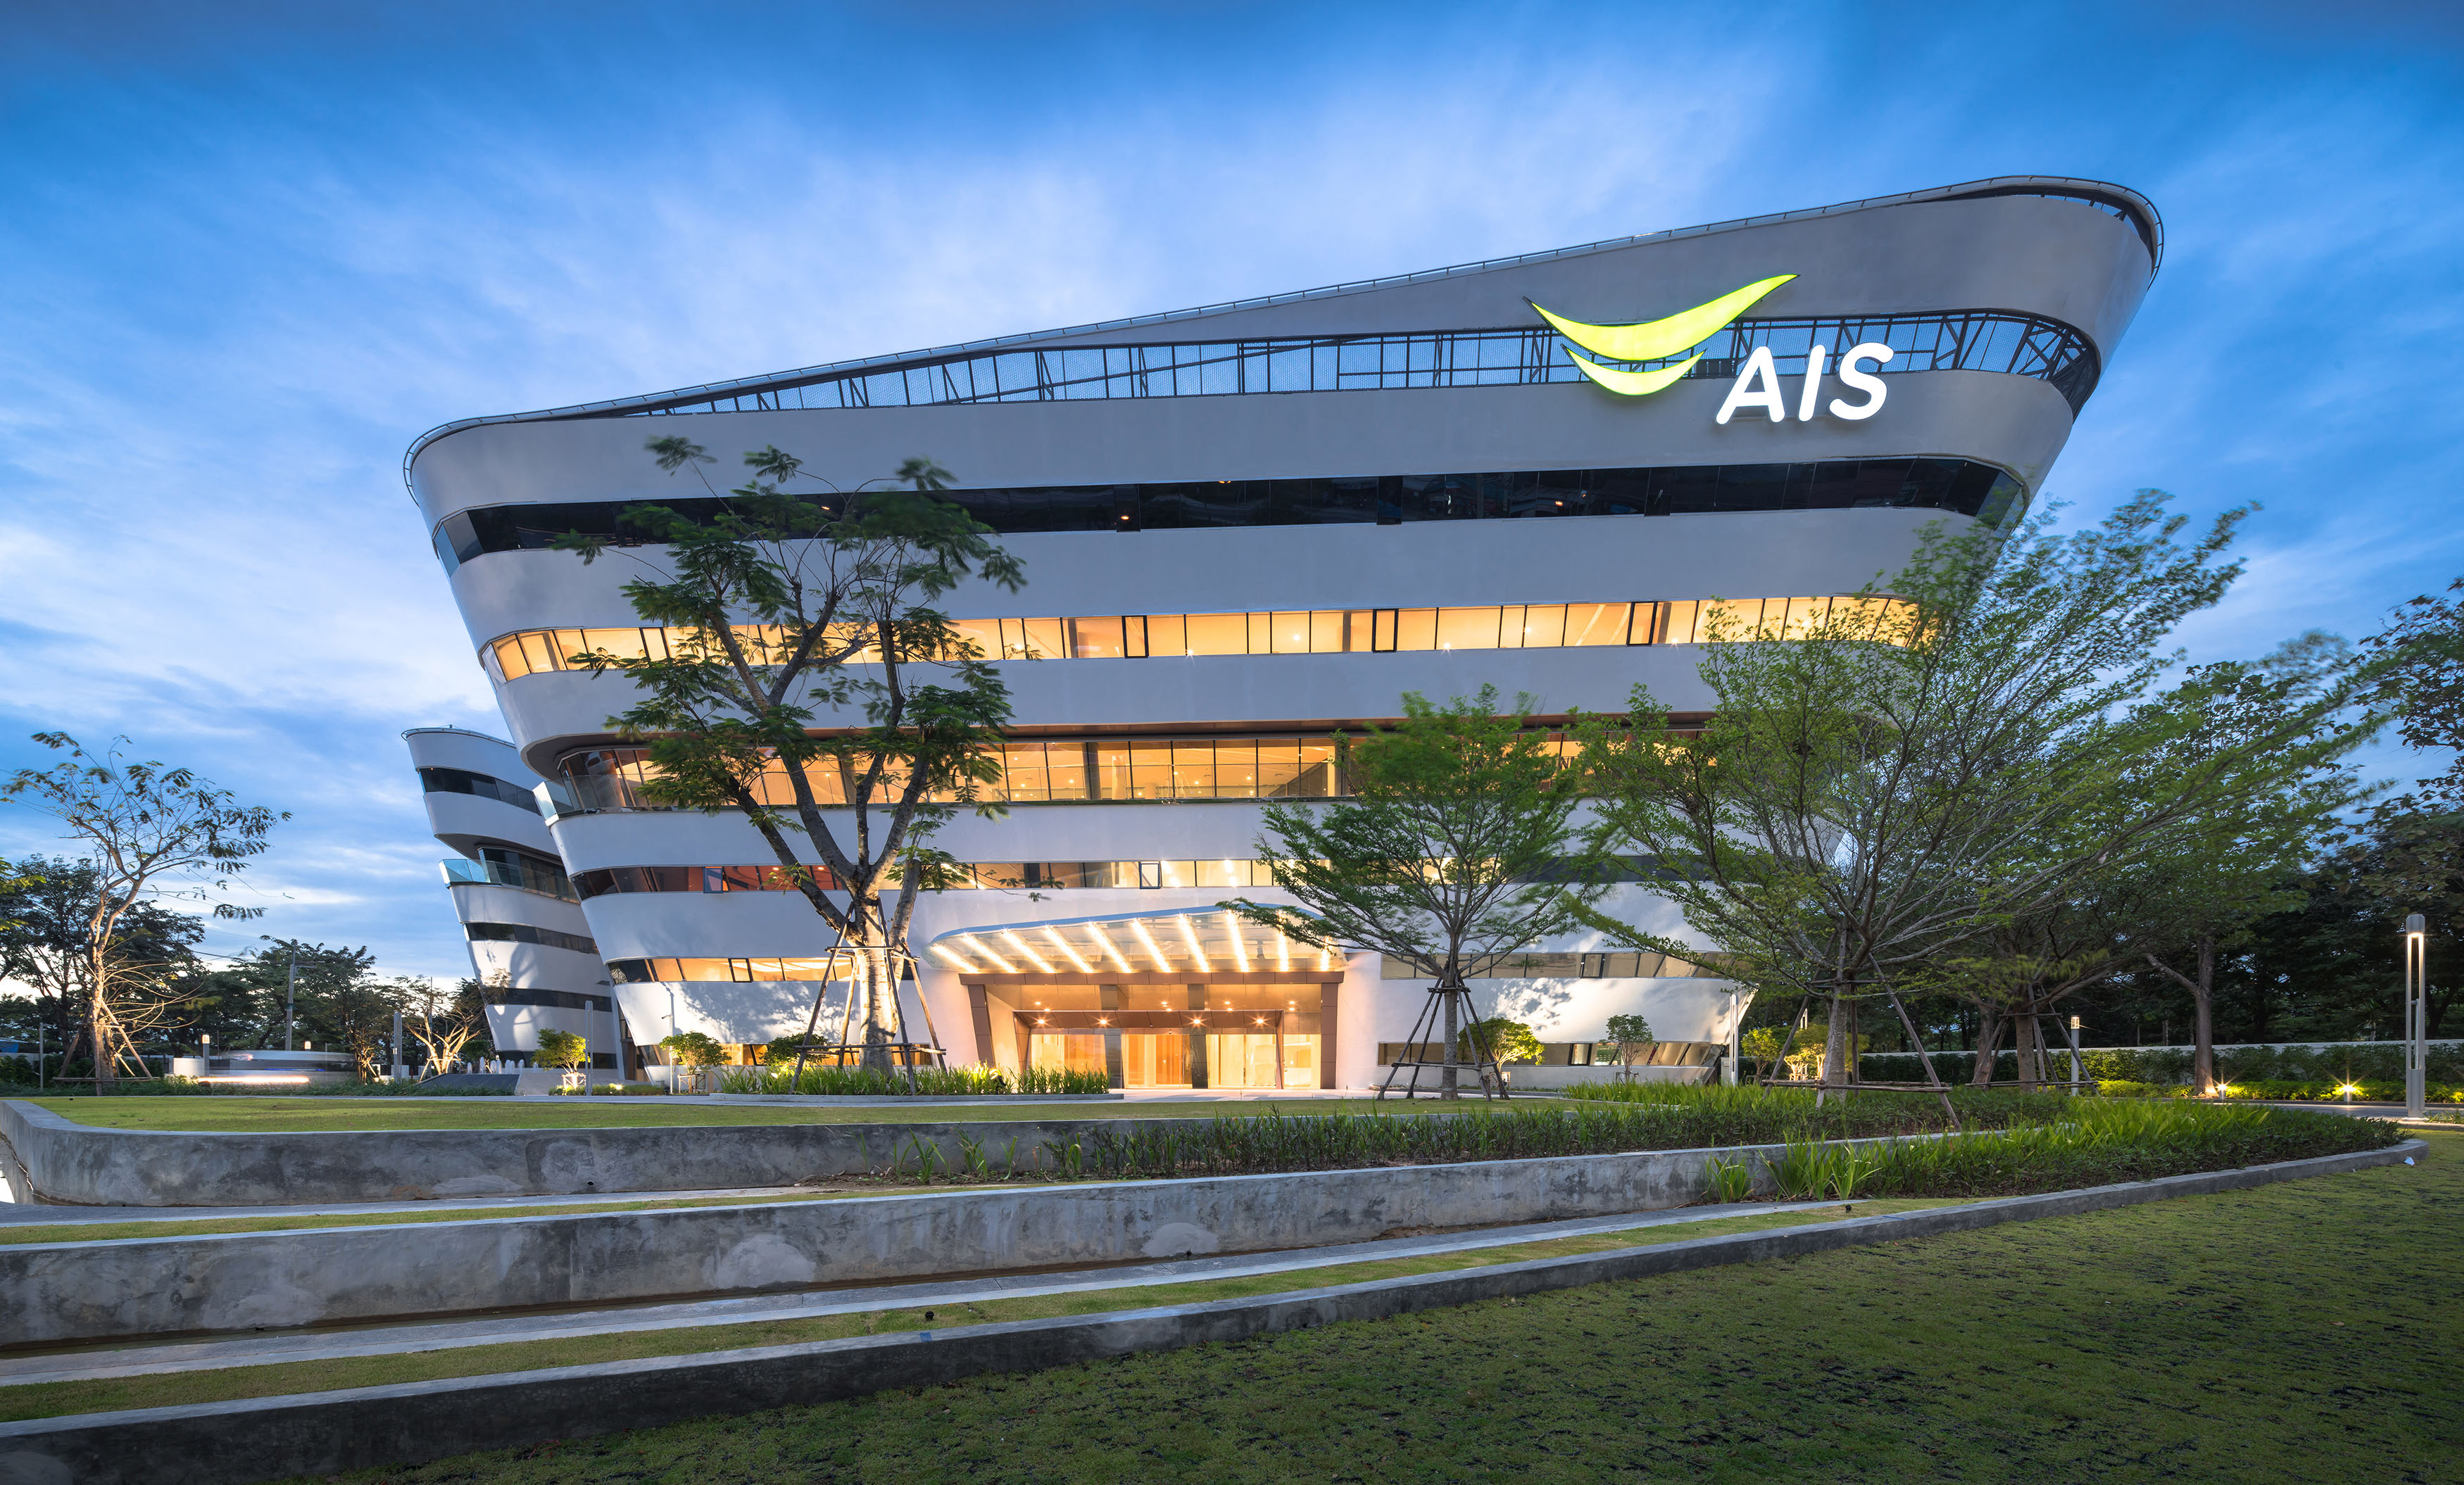 AIS ปูพรม ศึกษาทดสอบ 5G ทุกภาคทั่วประเทศ เป็นรายแรก! ล่าสุด บุกถิ่นอีสาน กดปุ่มเปิด 5G บน Live Network ที่โคราช